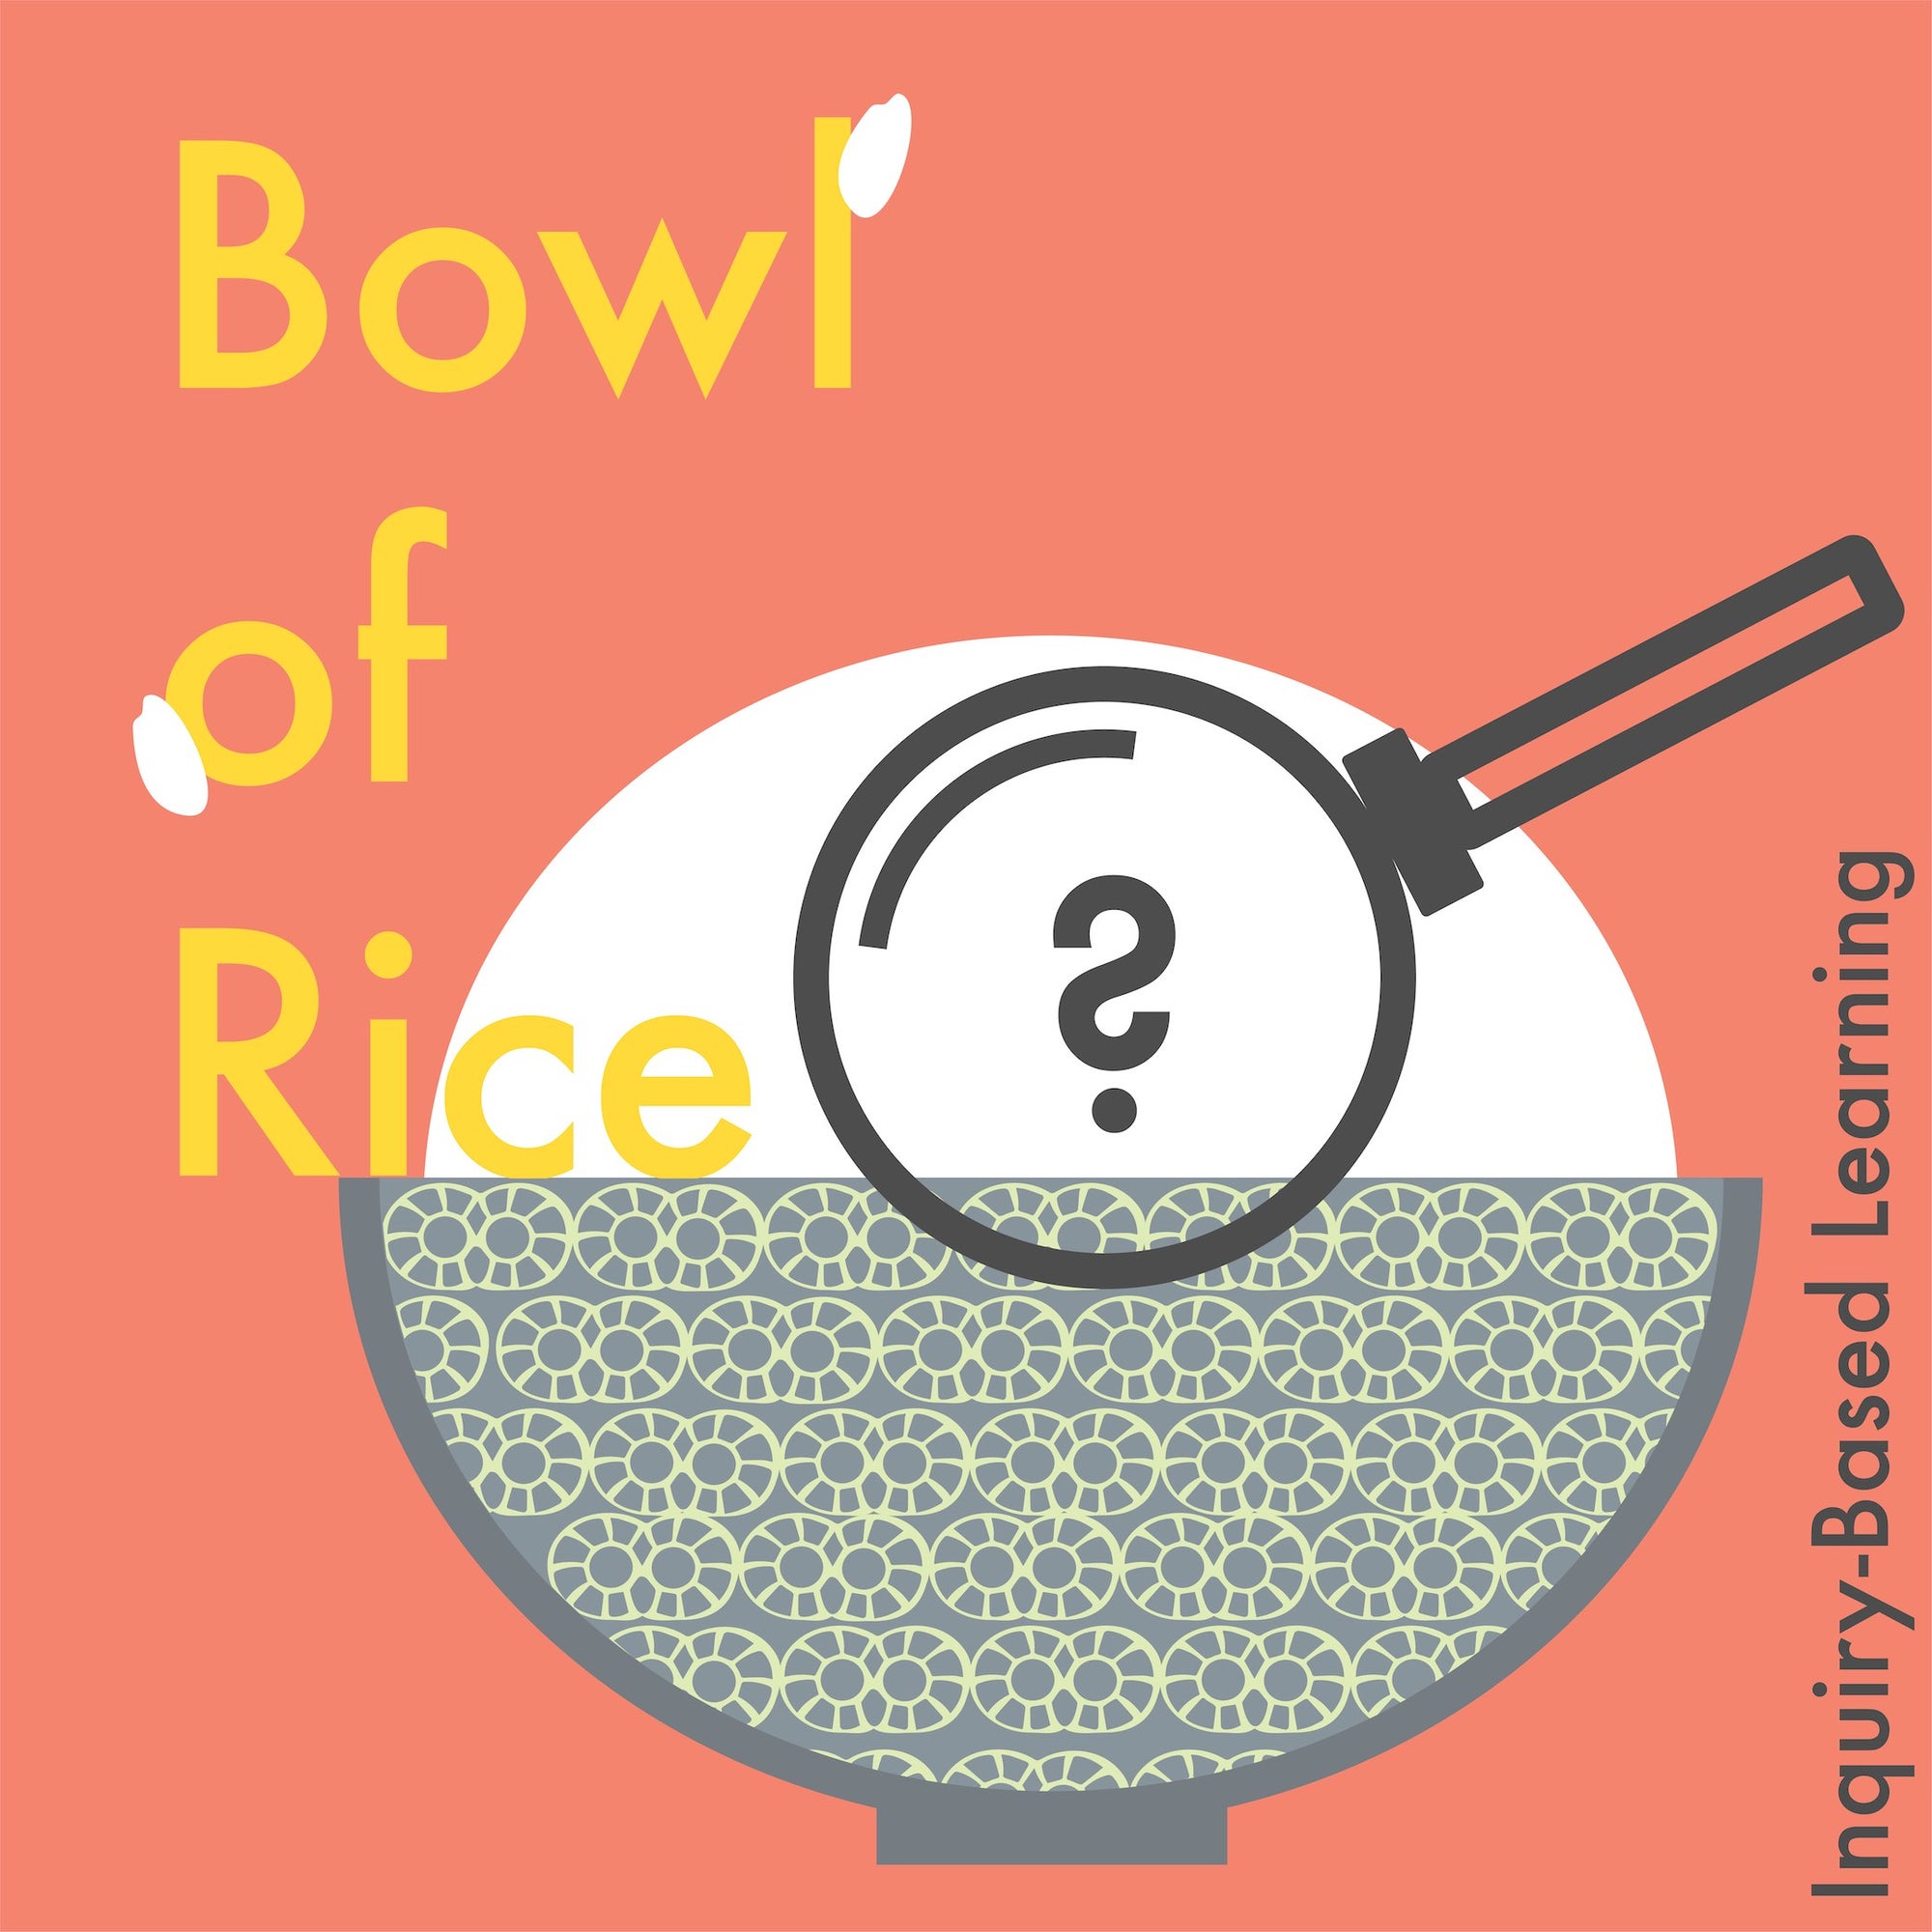 Bowl of Rice podcast logo